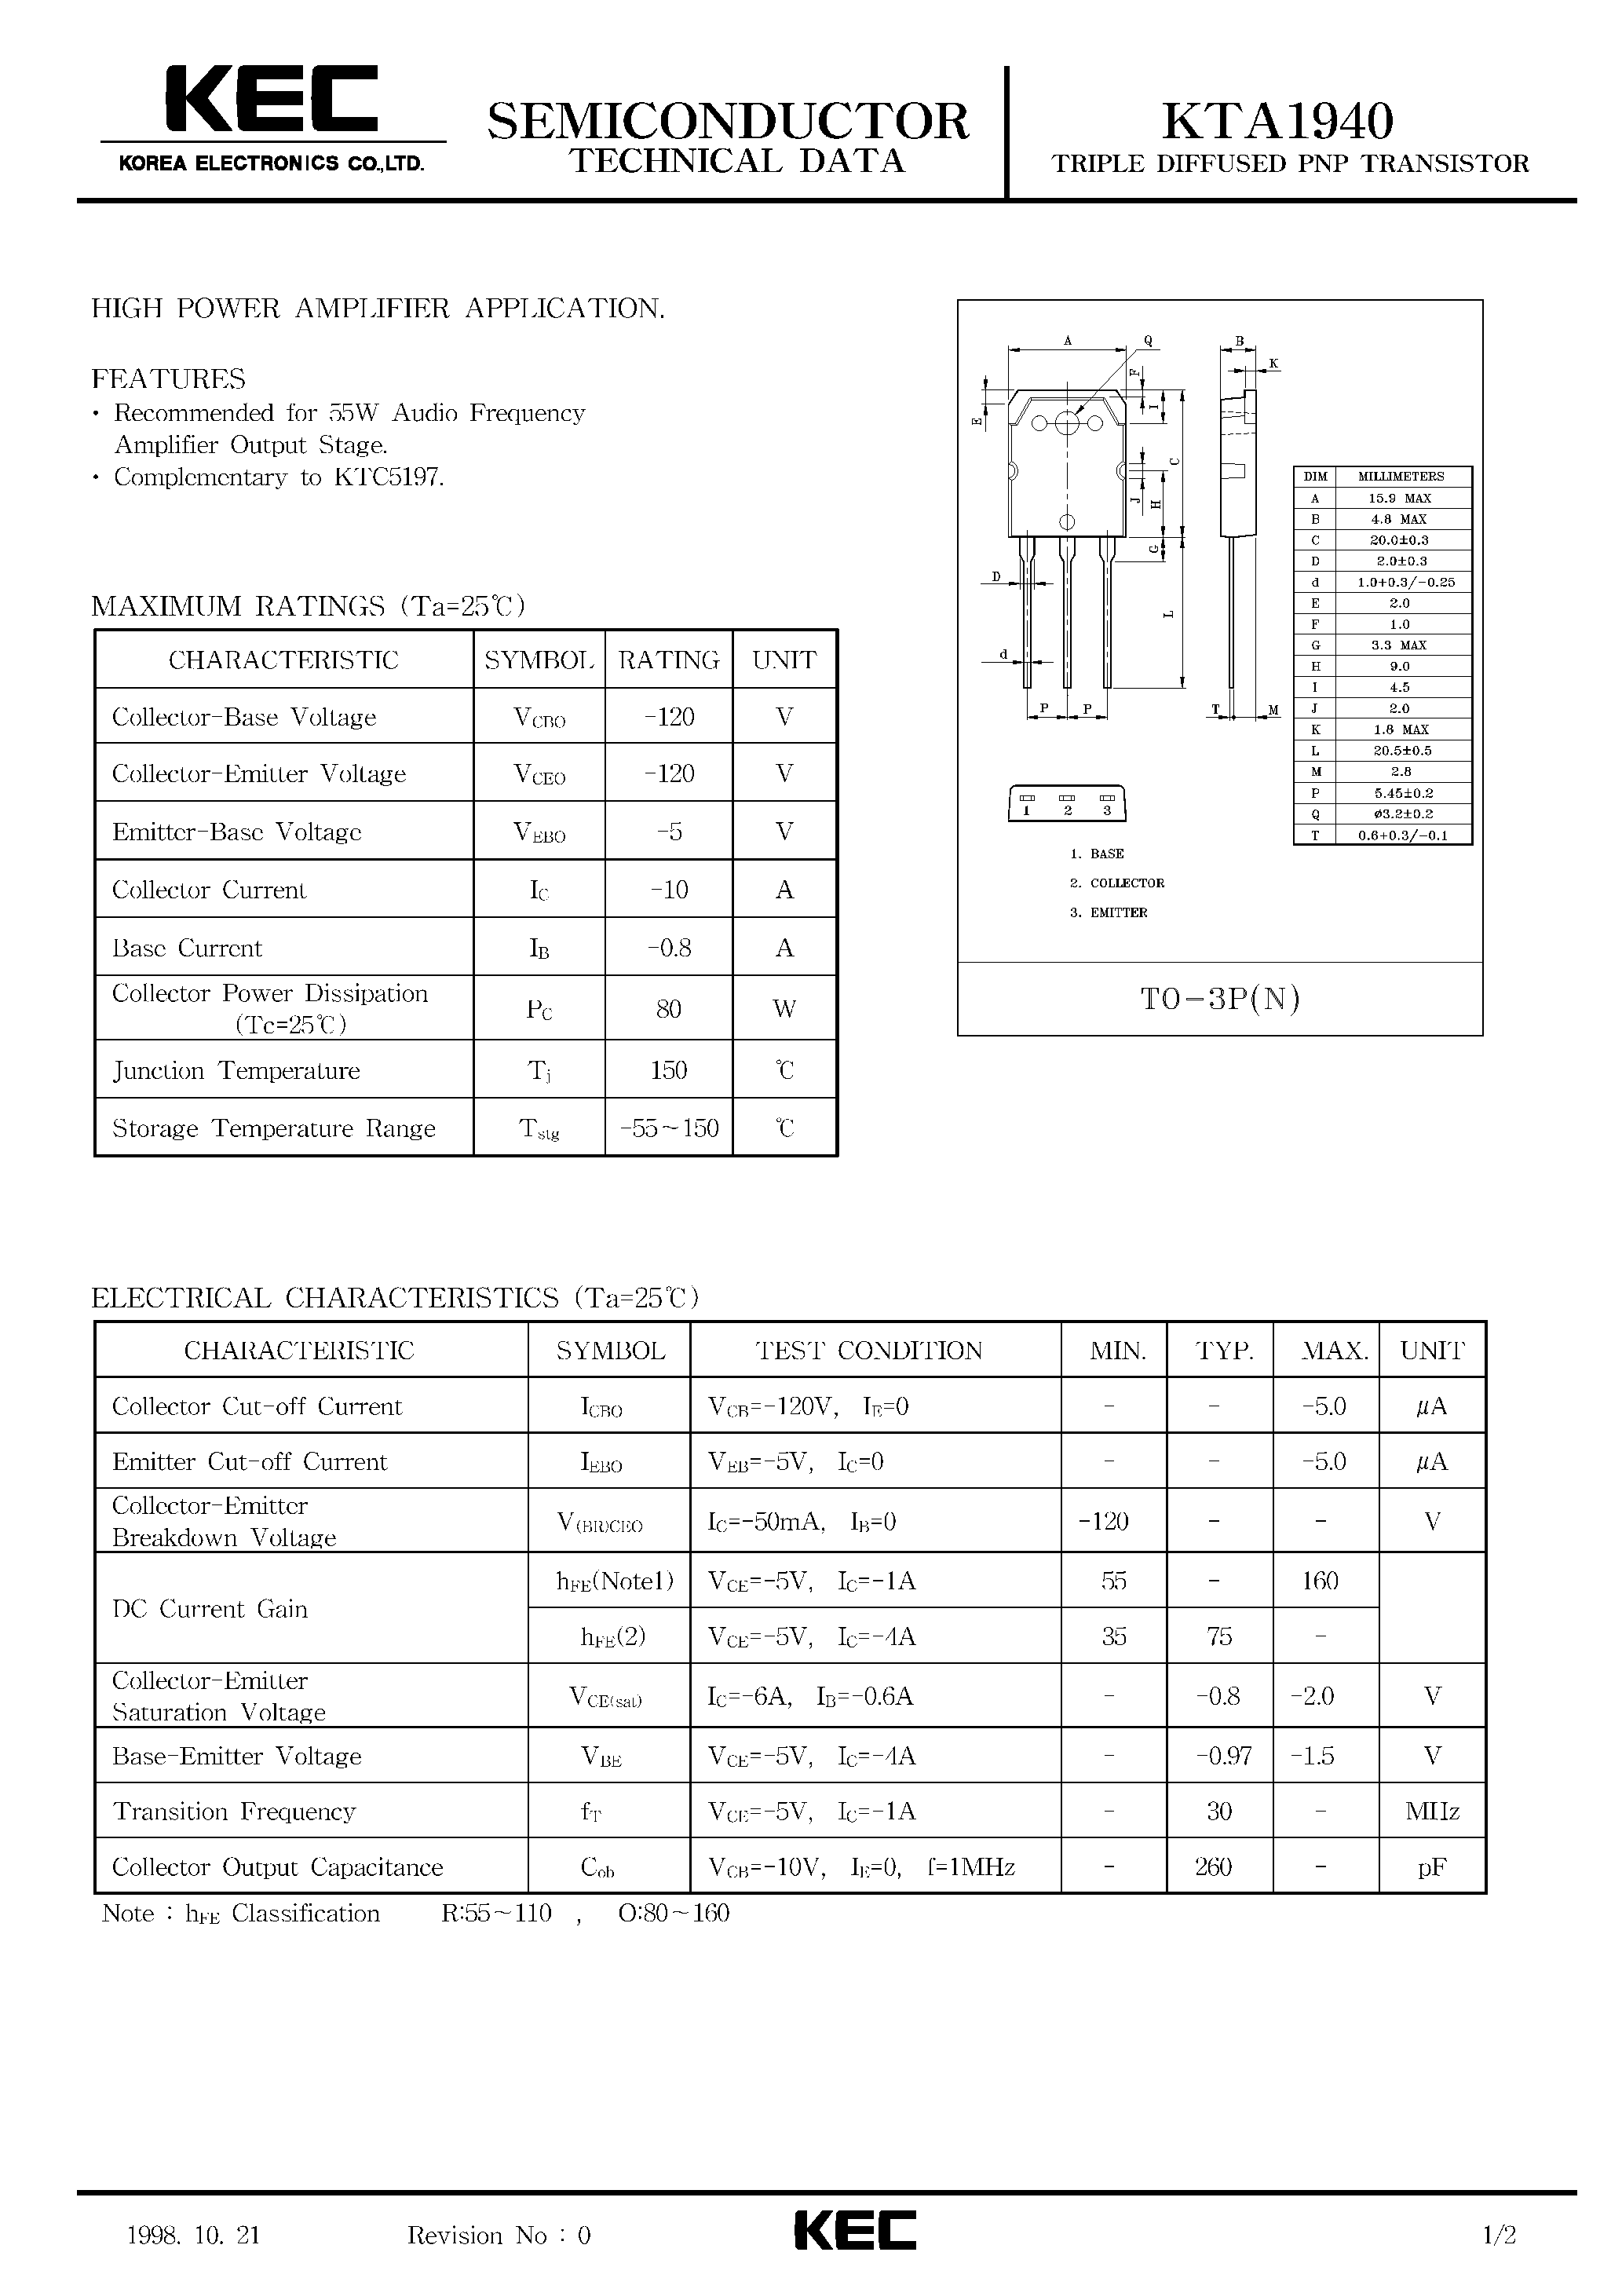 Datasheet KTA1940 - TRIPLE DIFFUSED PNP TRANSISTOR(HIGH POWER AMPLIFIER) page 1